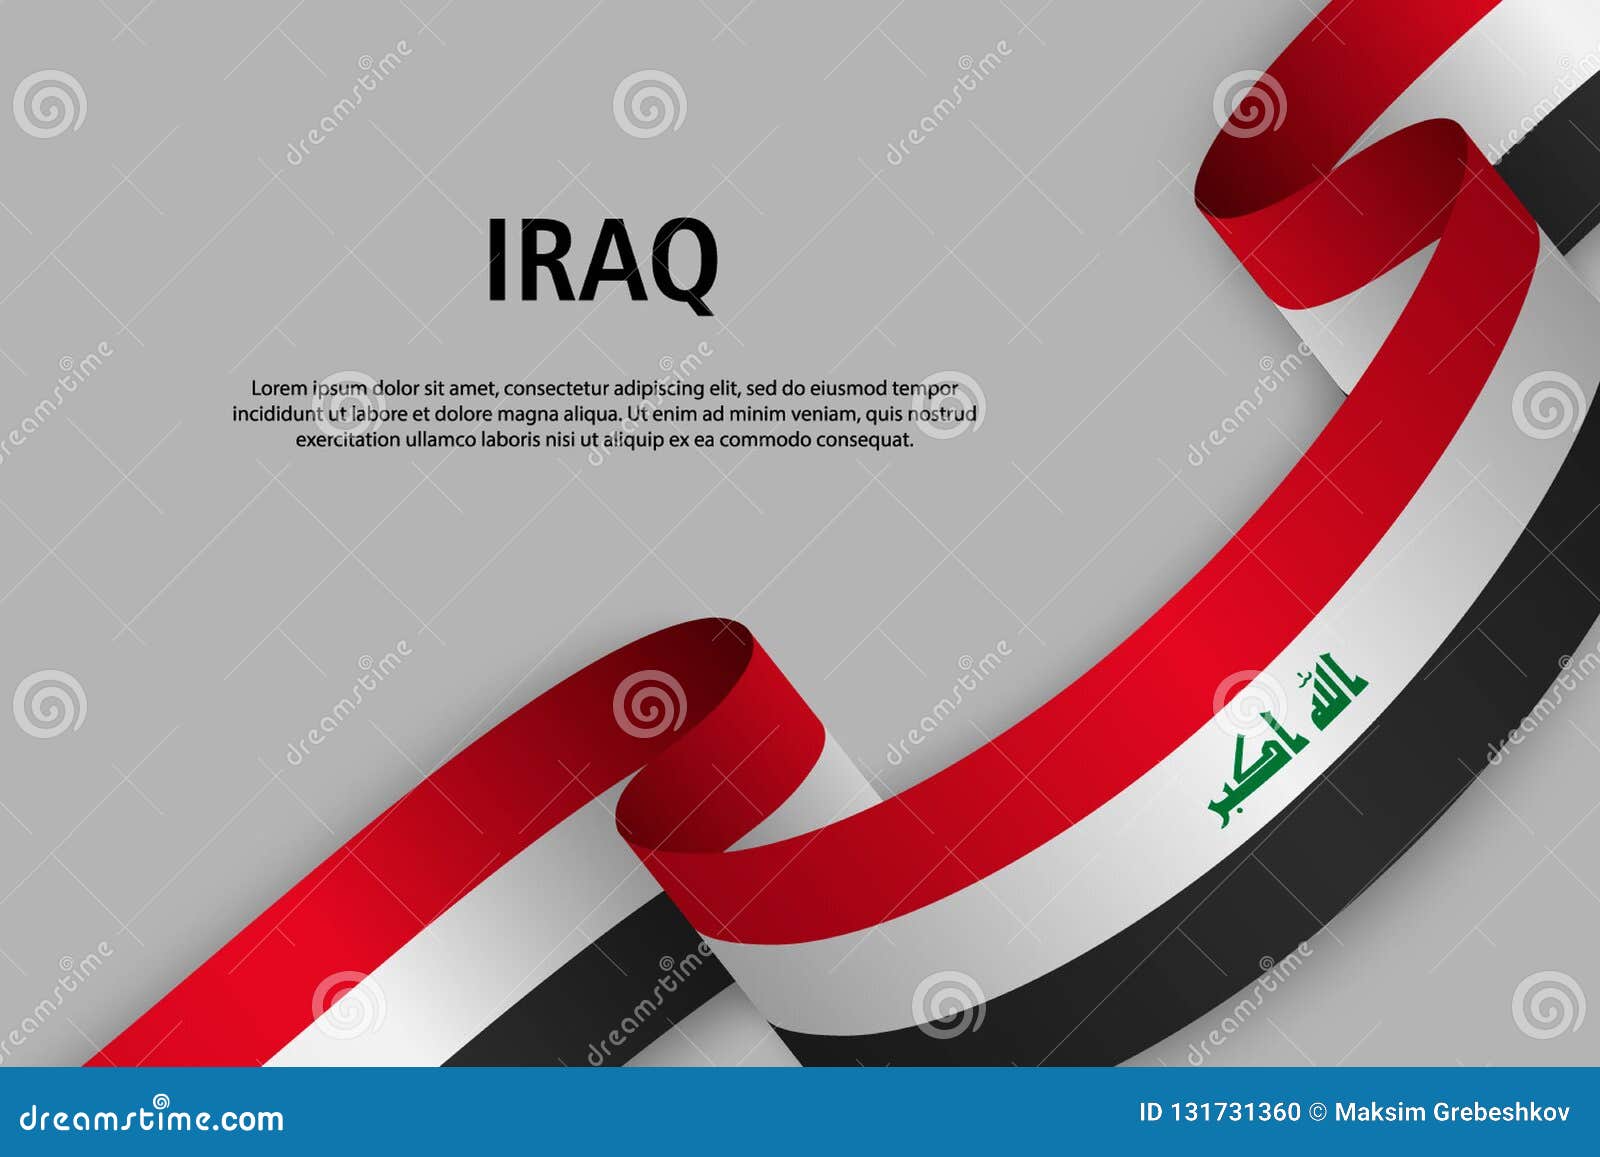 waving ribbon with flag of iraq,